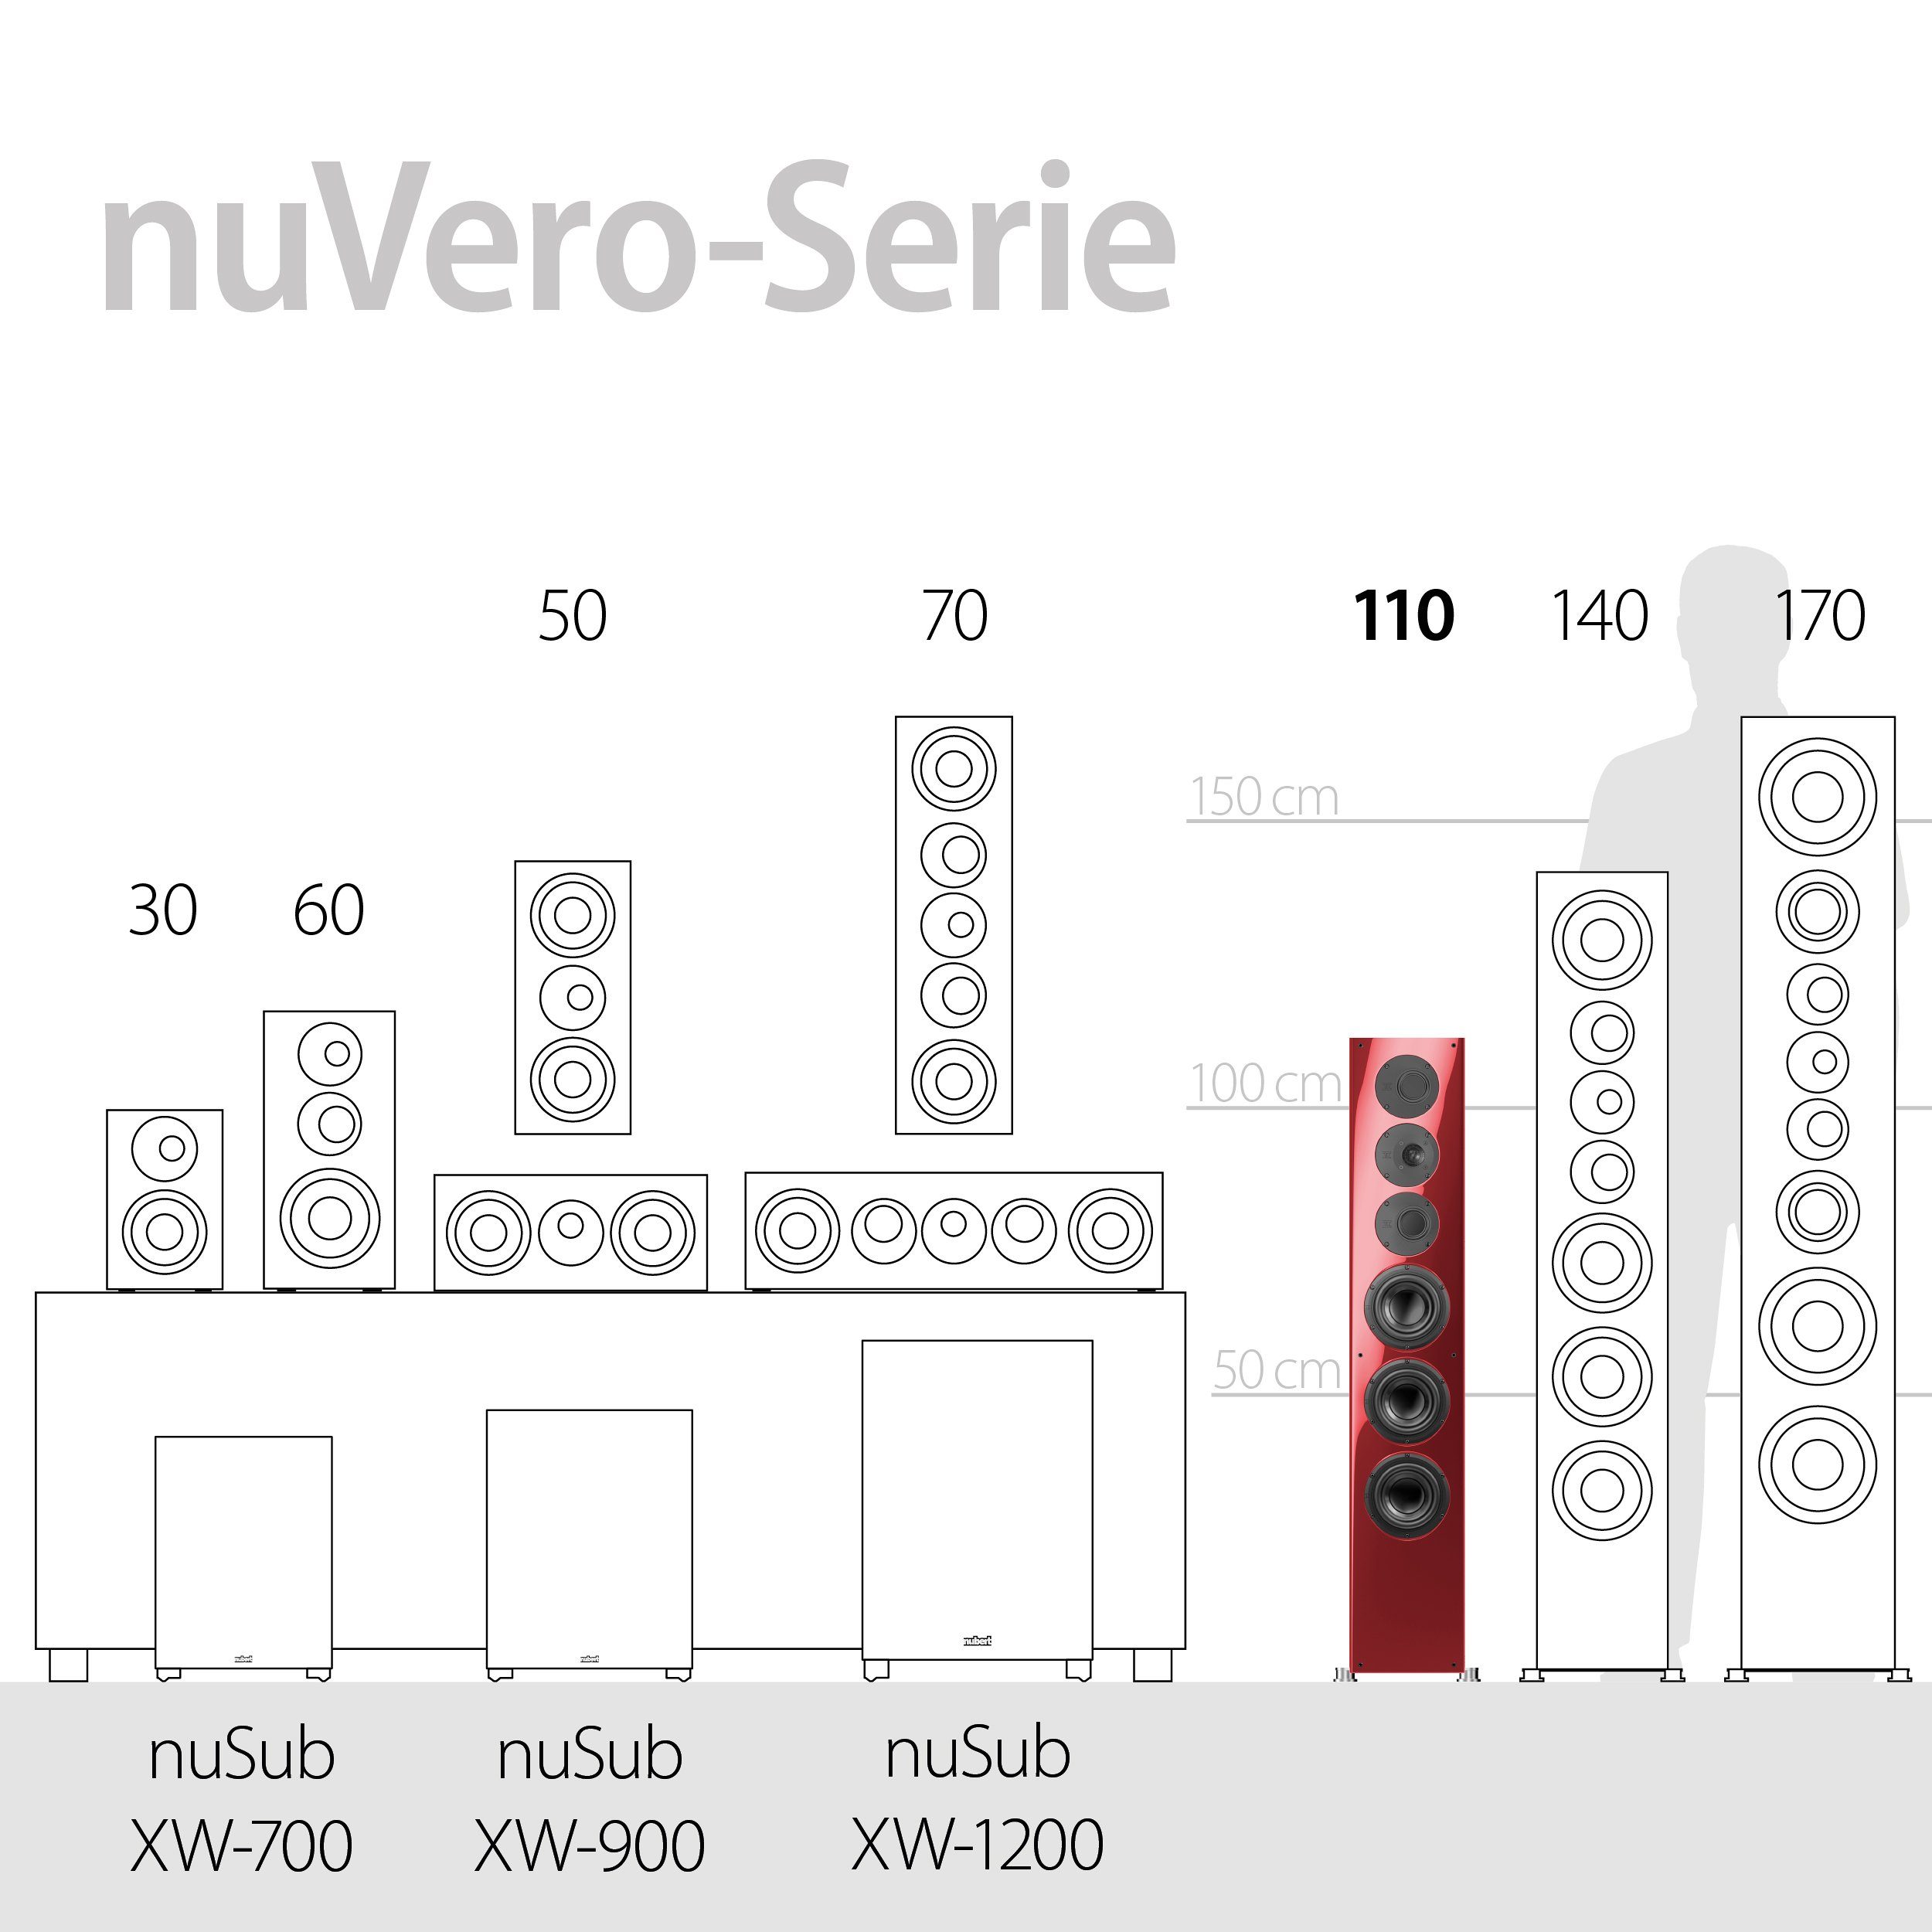 (520 Nubert W) 110 nuVero Diamantschwarz Stand-Lautsprecher